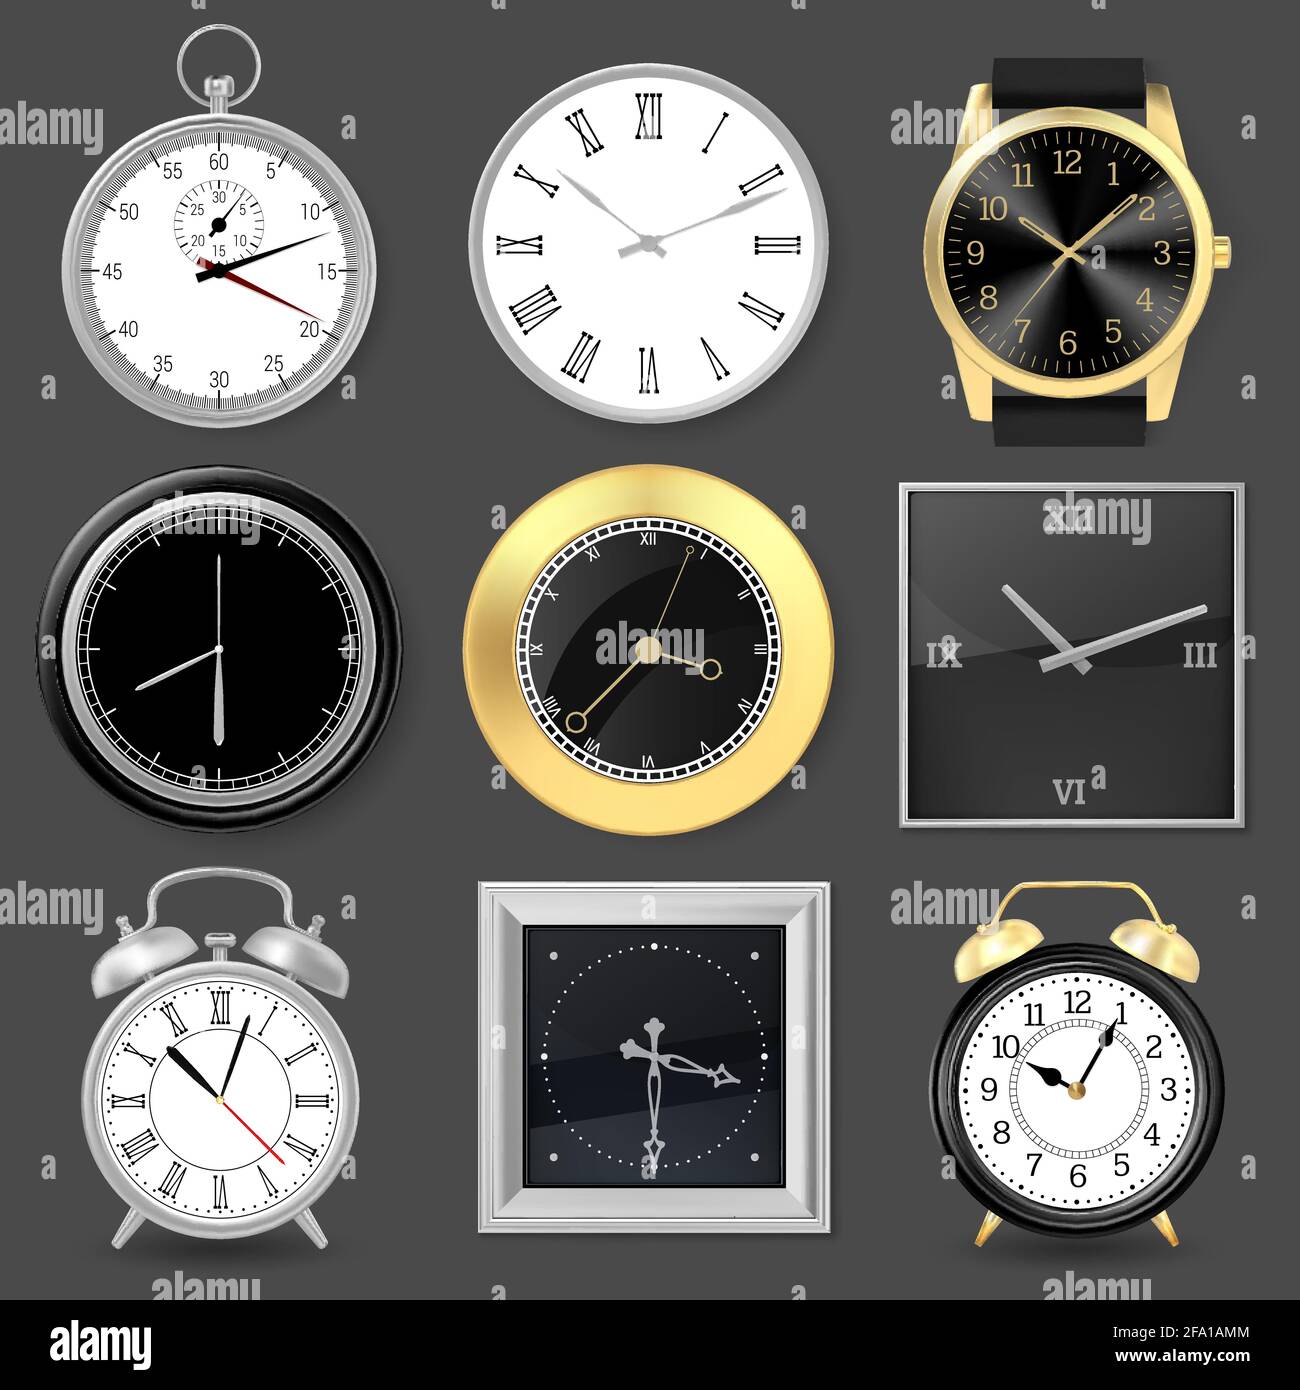 Realistische Uhren. Armbanduhr, Wecker und Wanduhren aus silbernem Metall,  3D-Ziffernblatt Vektor-Illustrationsset. Runde Analoguhren  Stock-Vektorgrafik - Alamy